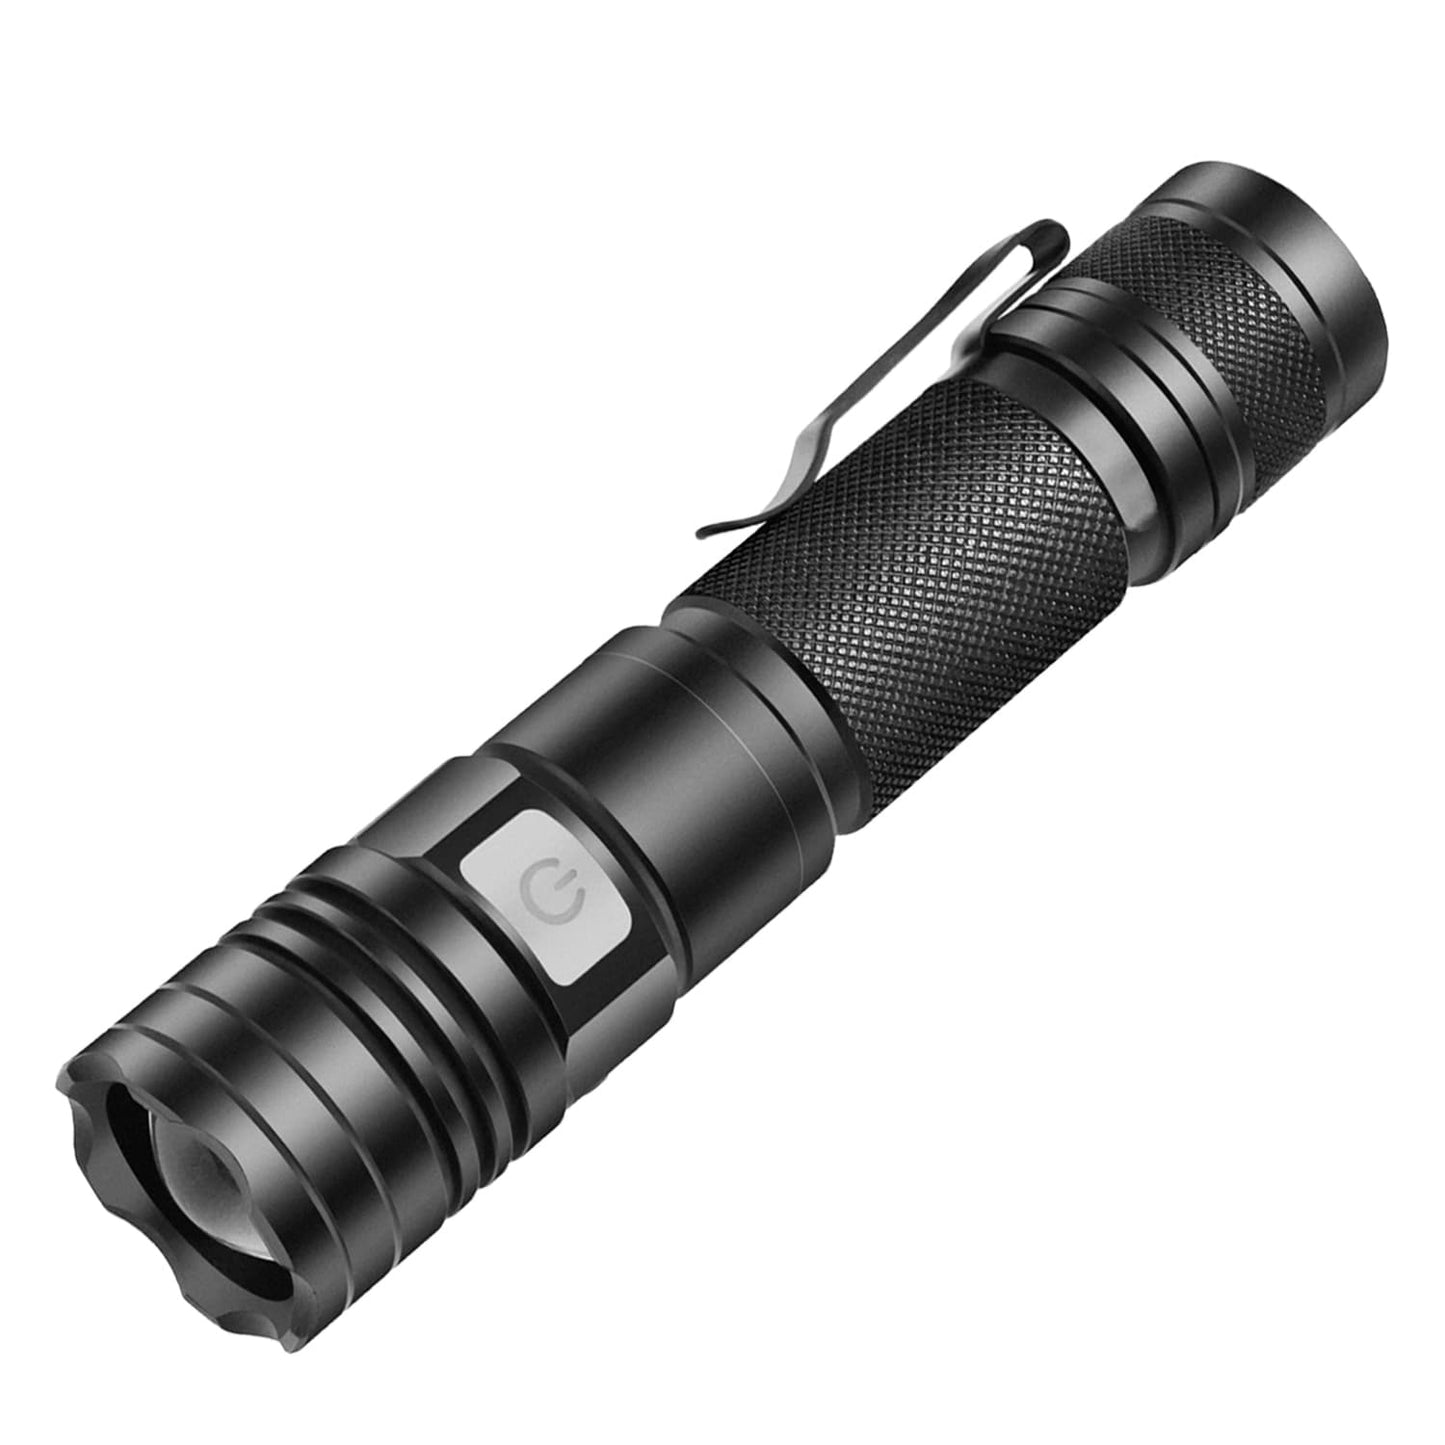 Convenient Powerful Zoomable 1600 lumens Flashlight Zeta XV